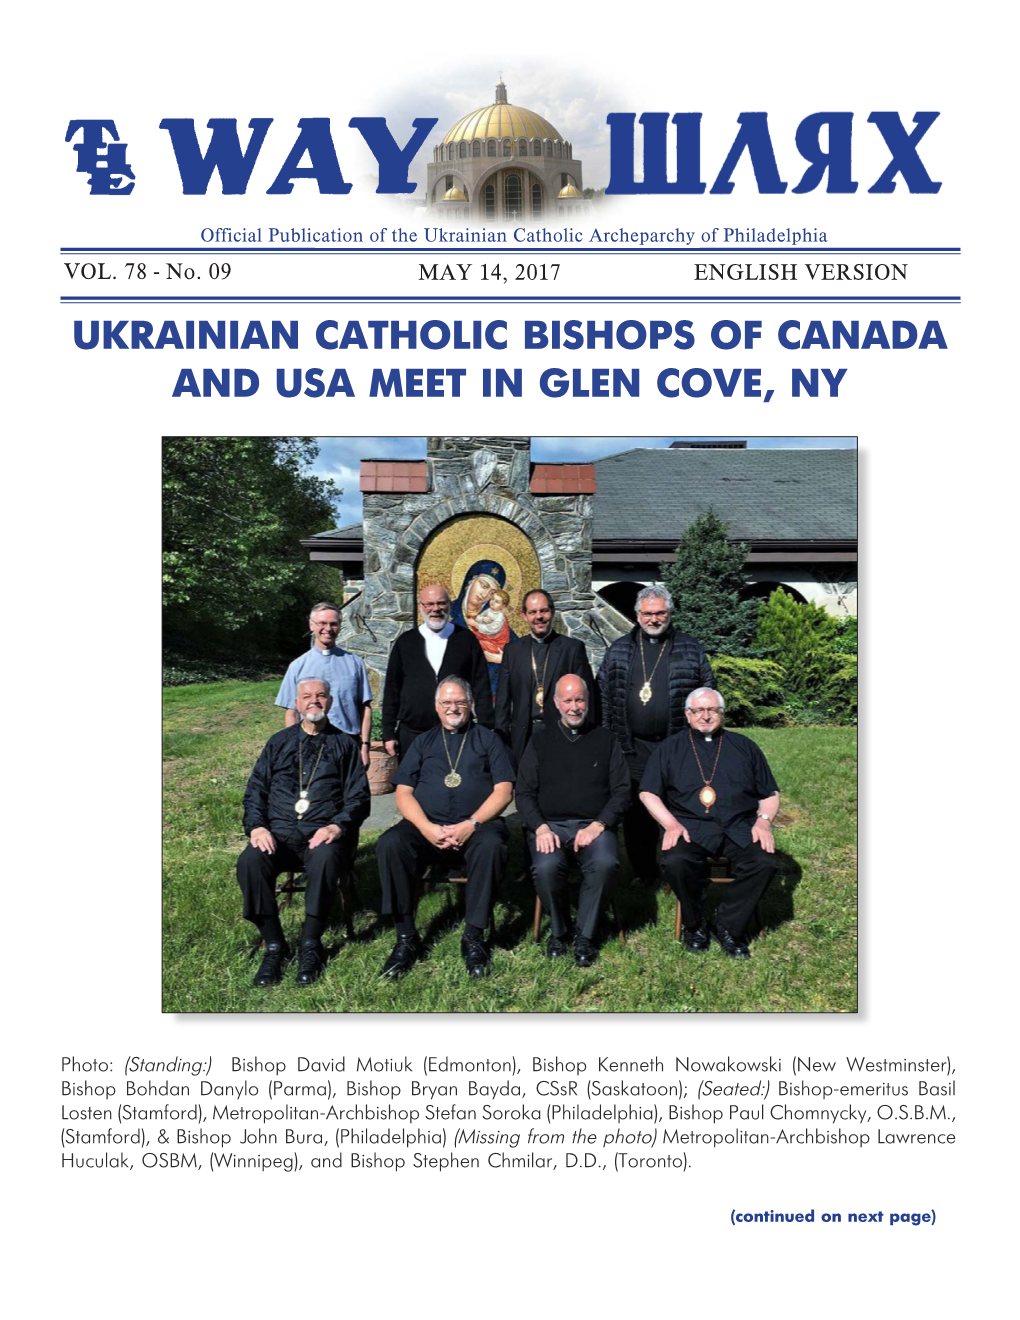 Ukrainian Catholic Bishops of Canada and Usa Meet in Glen Cove, Ny